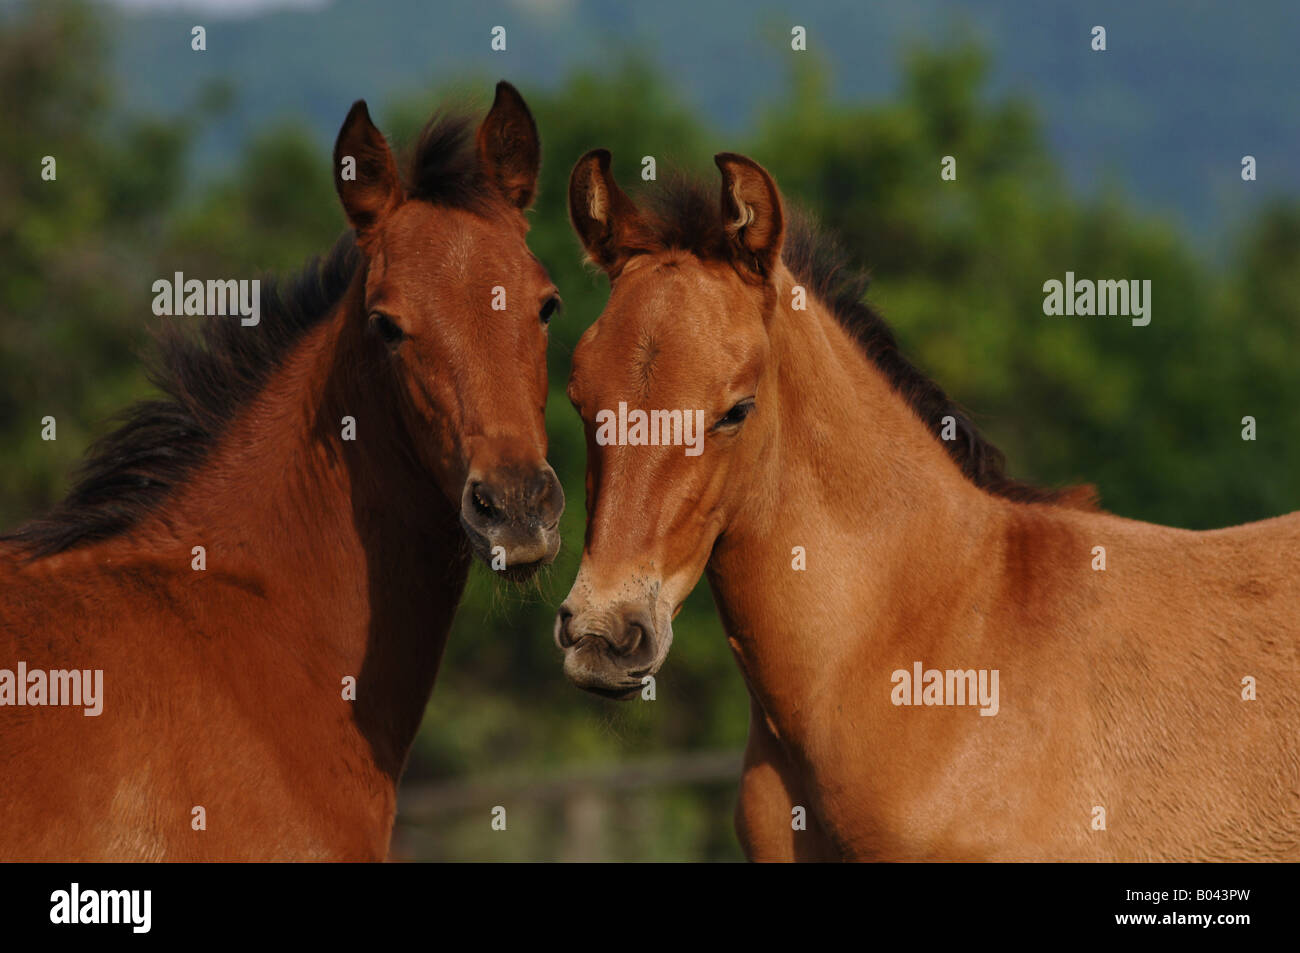 pura raza espanola pre andalusier Andalusian Horse Fohlen Andalusierfohlen Pre Fohlen Foal Stock Photo